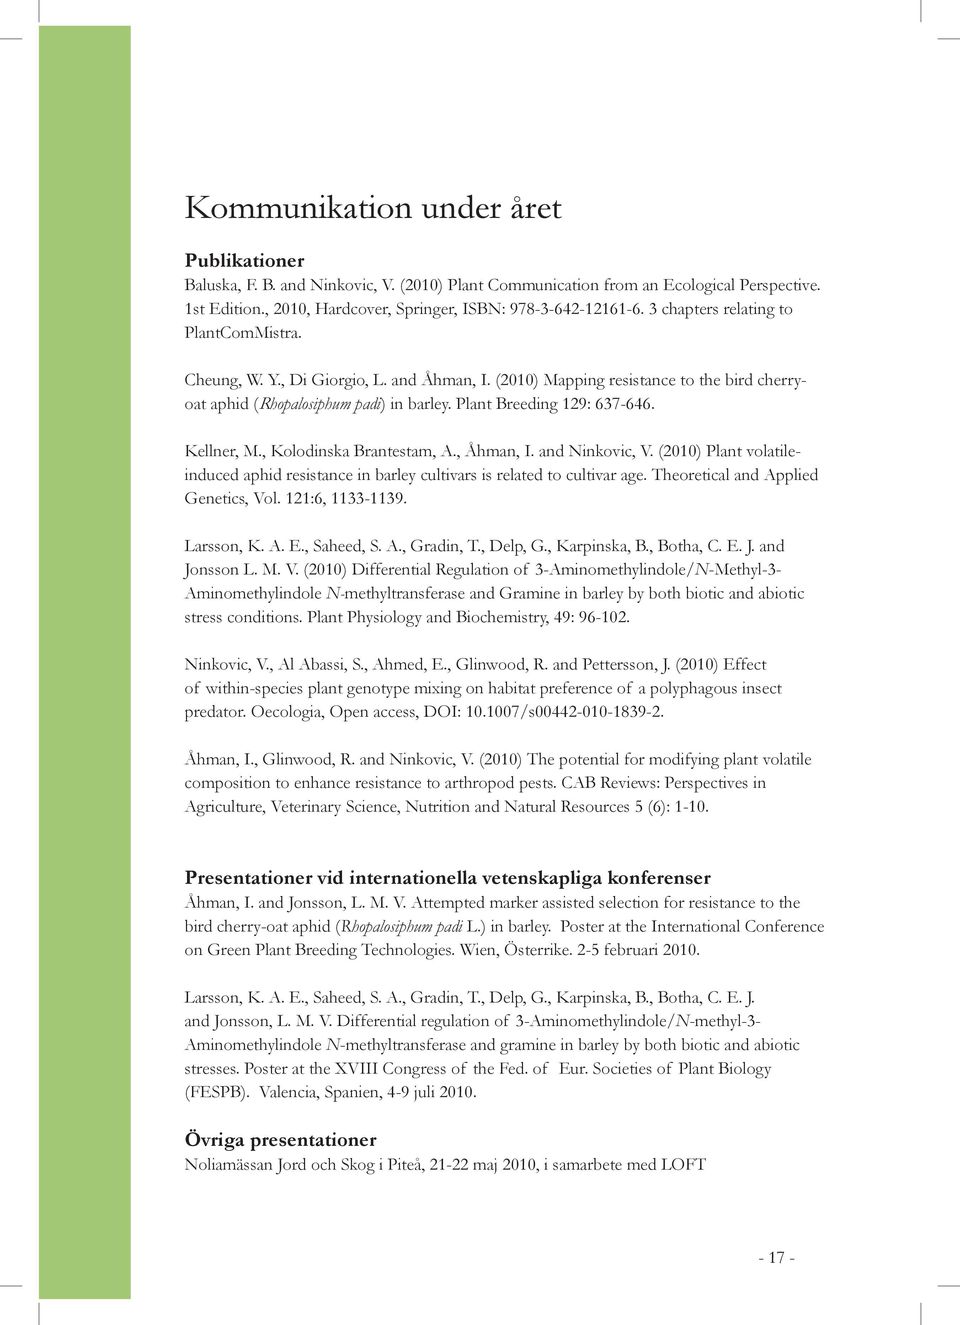 Kellner, M., Kolodinska Brantestam, A., Åhman, I. and Ninkovic, V. (2010) Plant volatileinduced aphid resistance in barley cultivars is related to cultivar age. Theoretical and Applied Genetics, Vol.